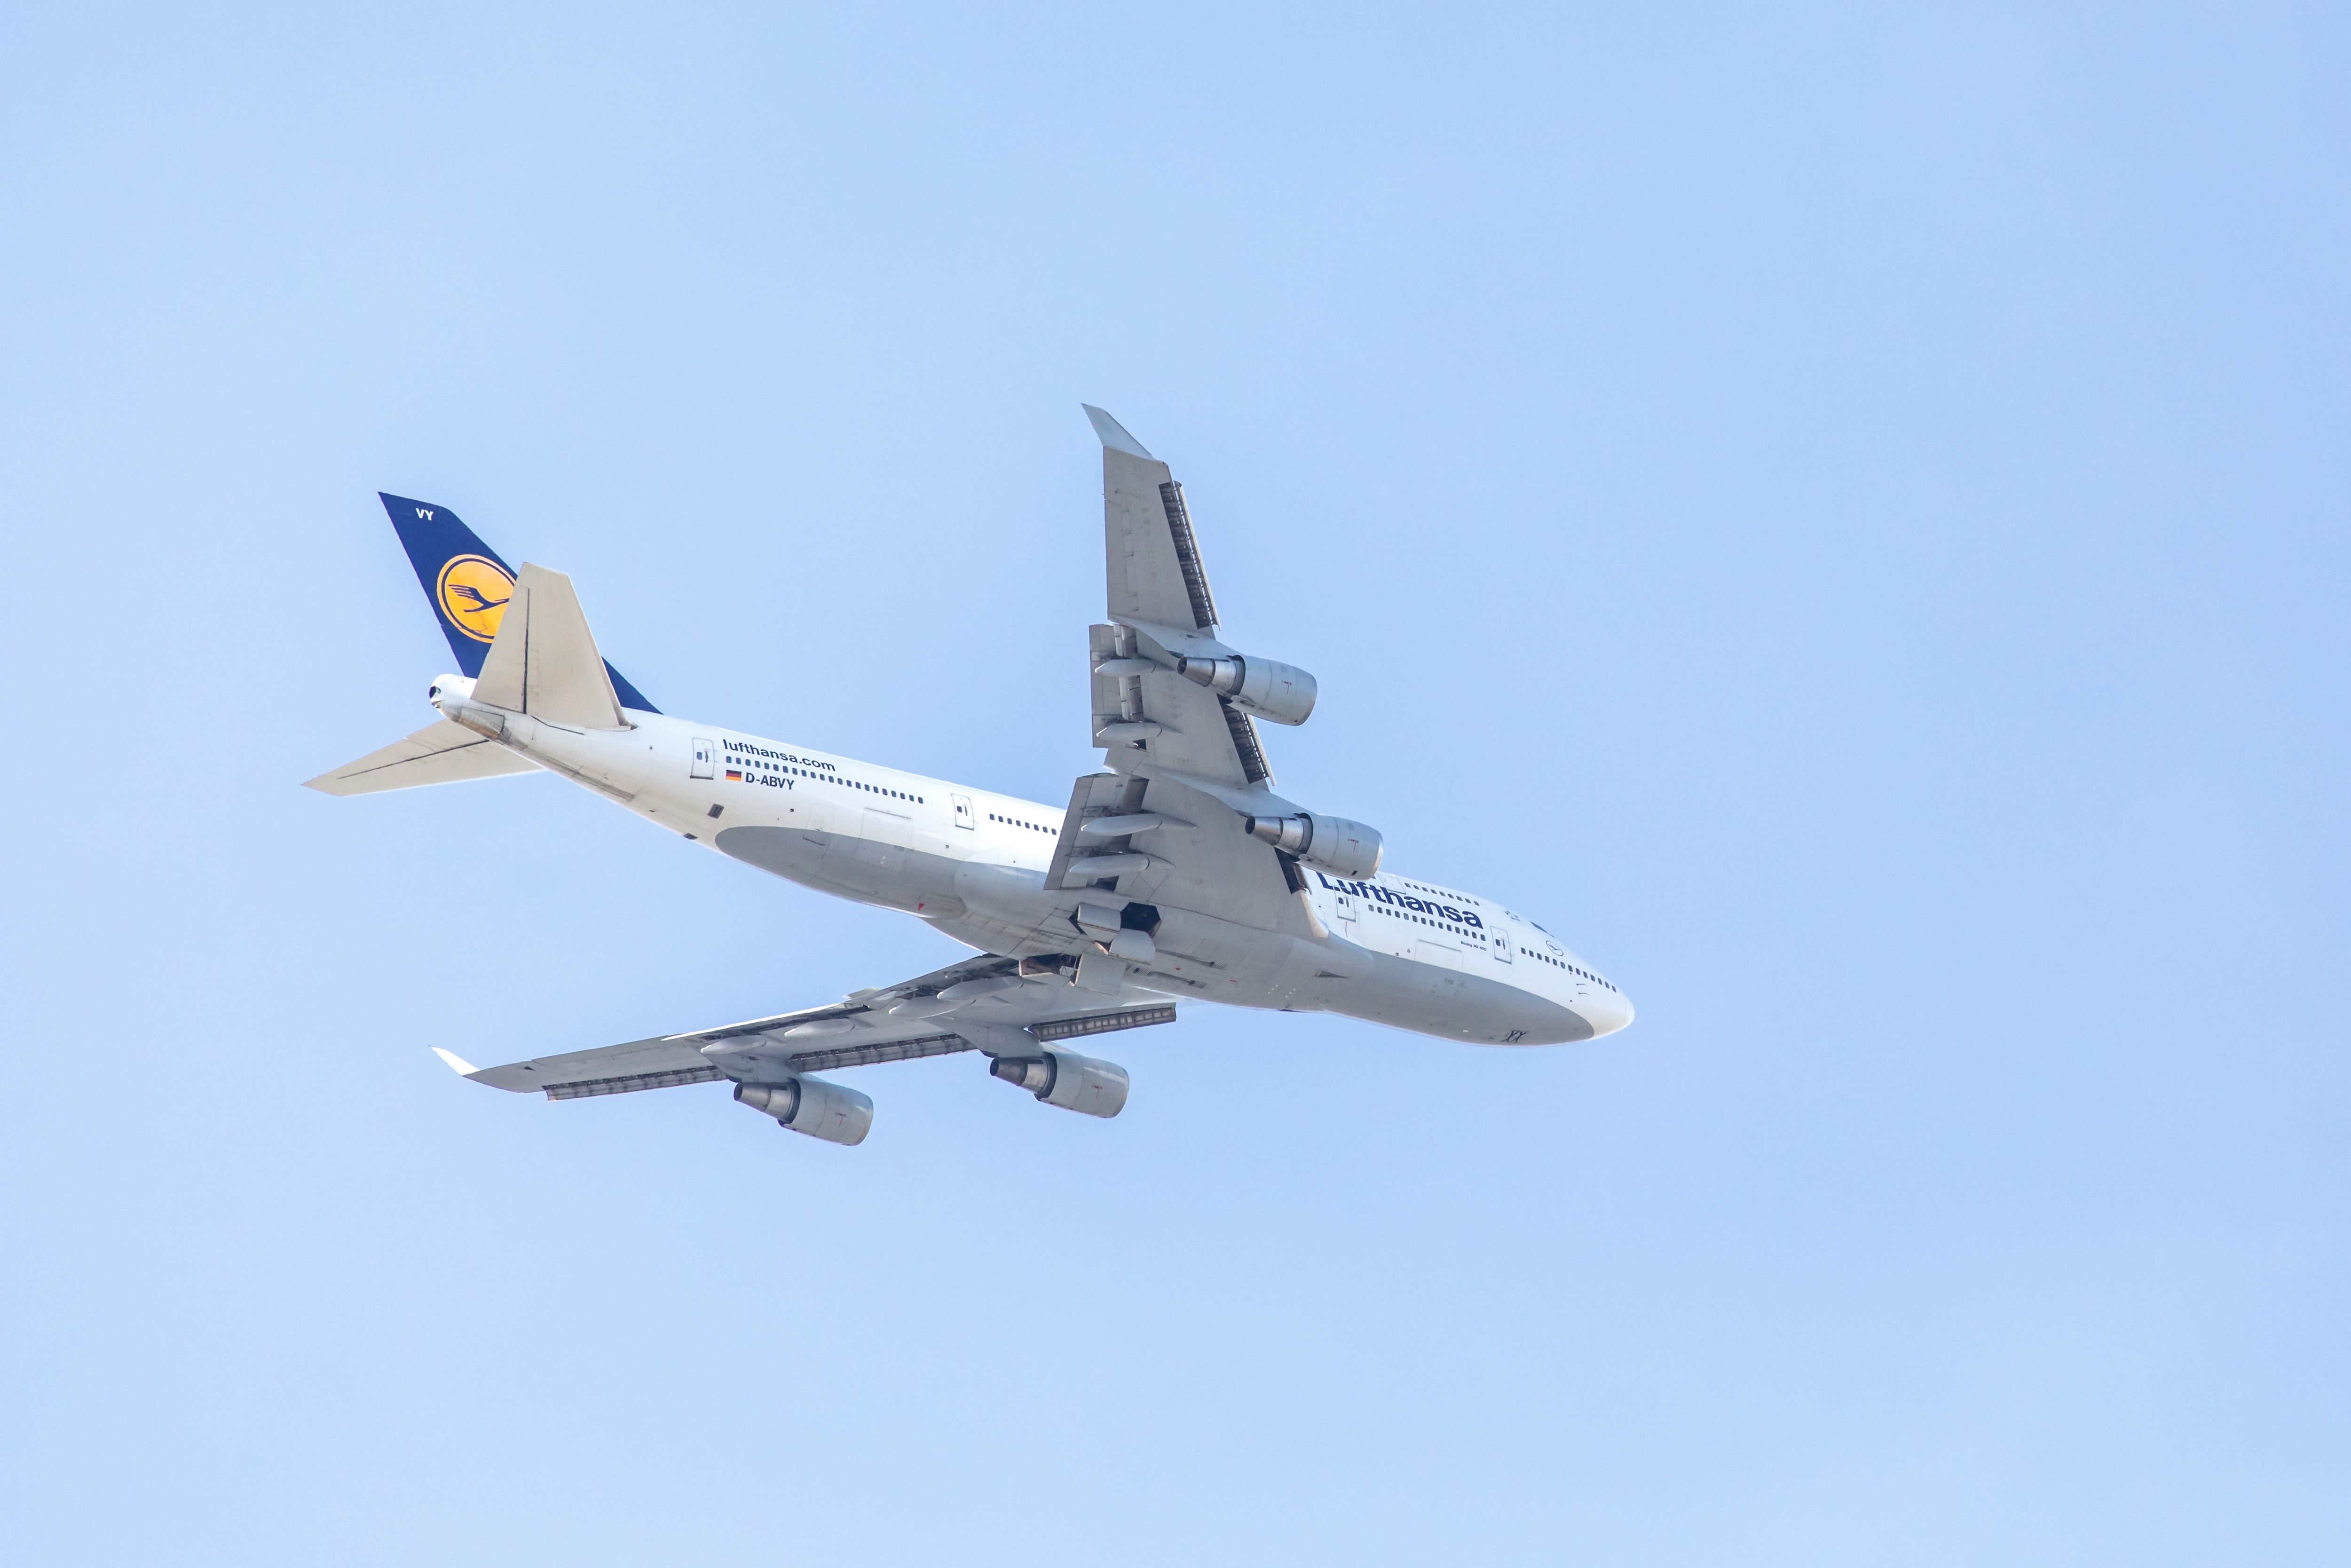 Lufthansa Boeing 747-400 landing at Toronto Pearson International Airport